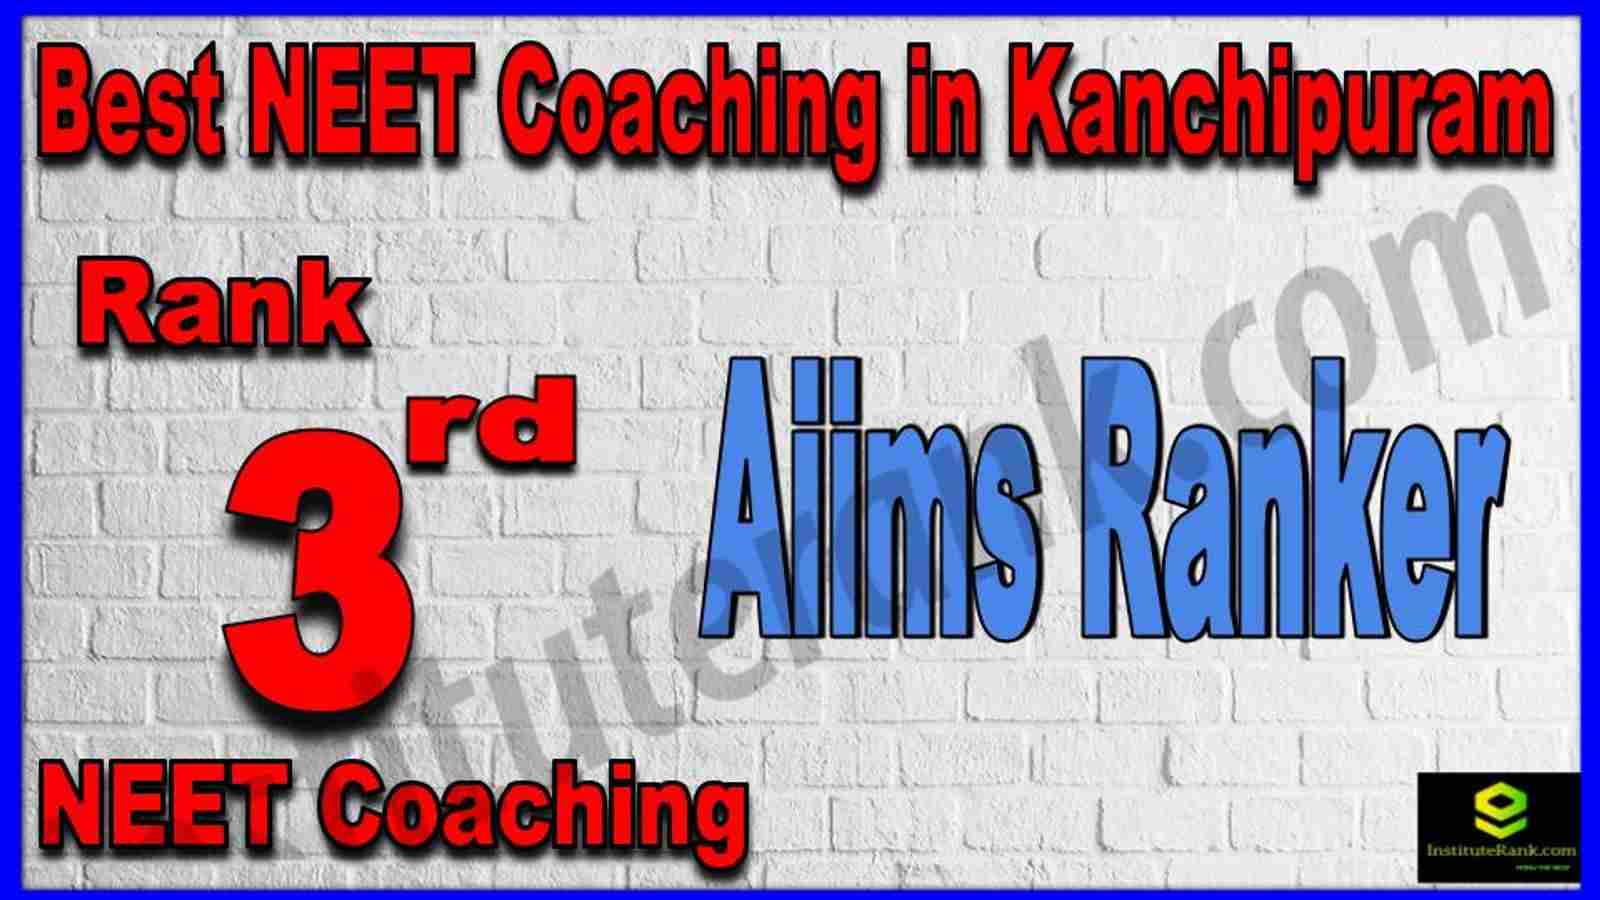 Rank 3rd Best NEET Coaching in Kanchipuram